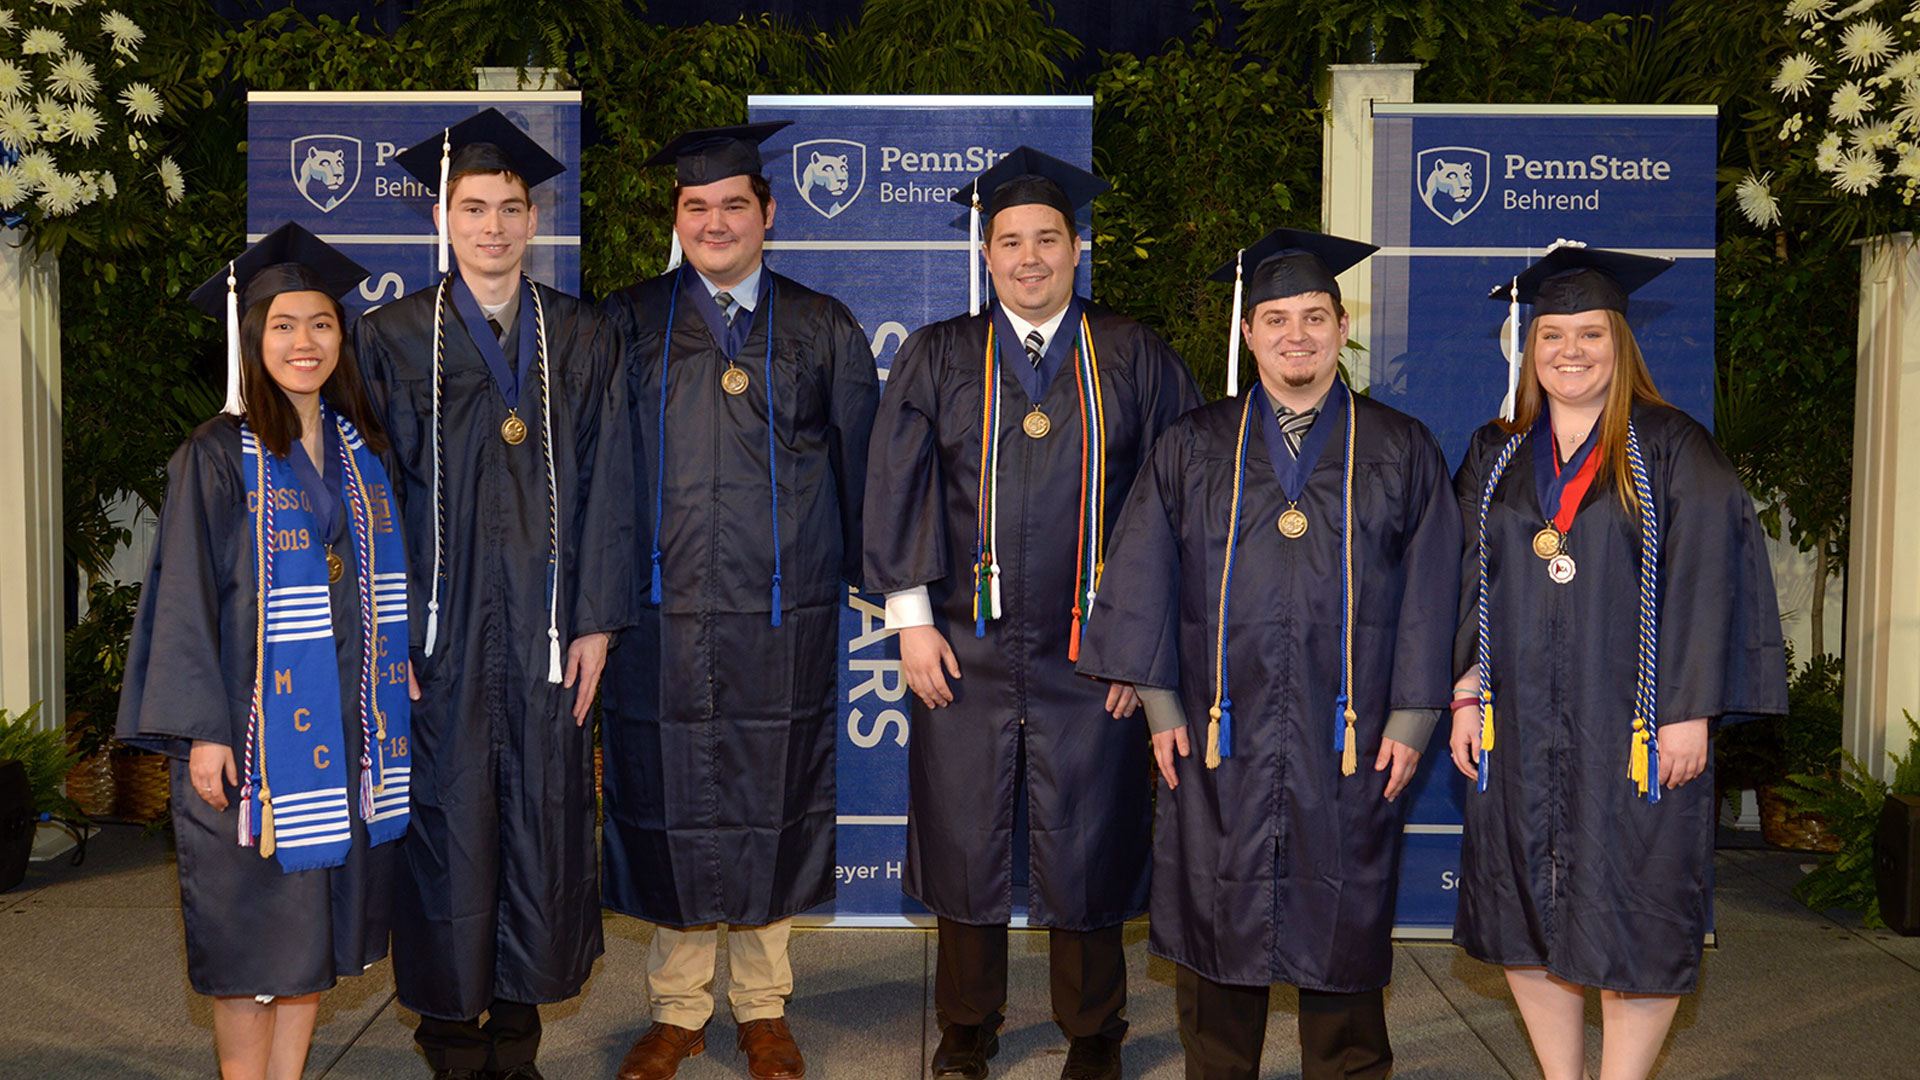 2019 Behrend Schreyer Honors College graduates